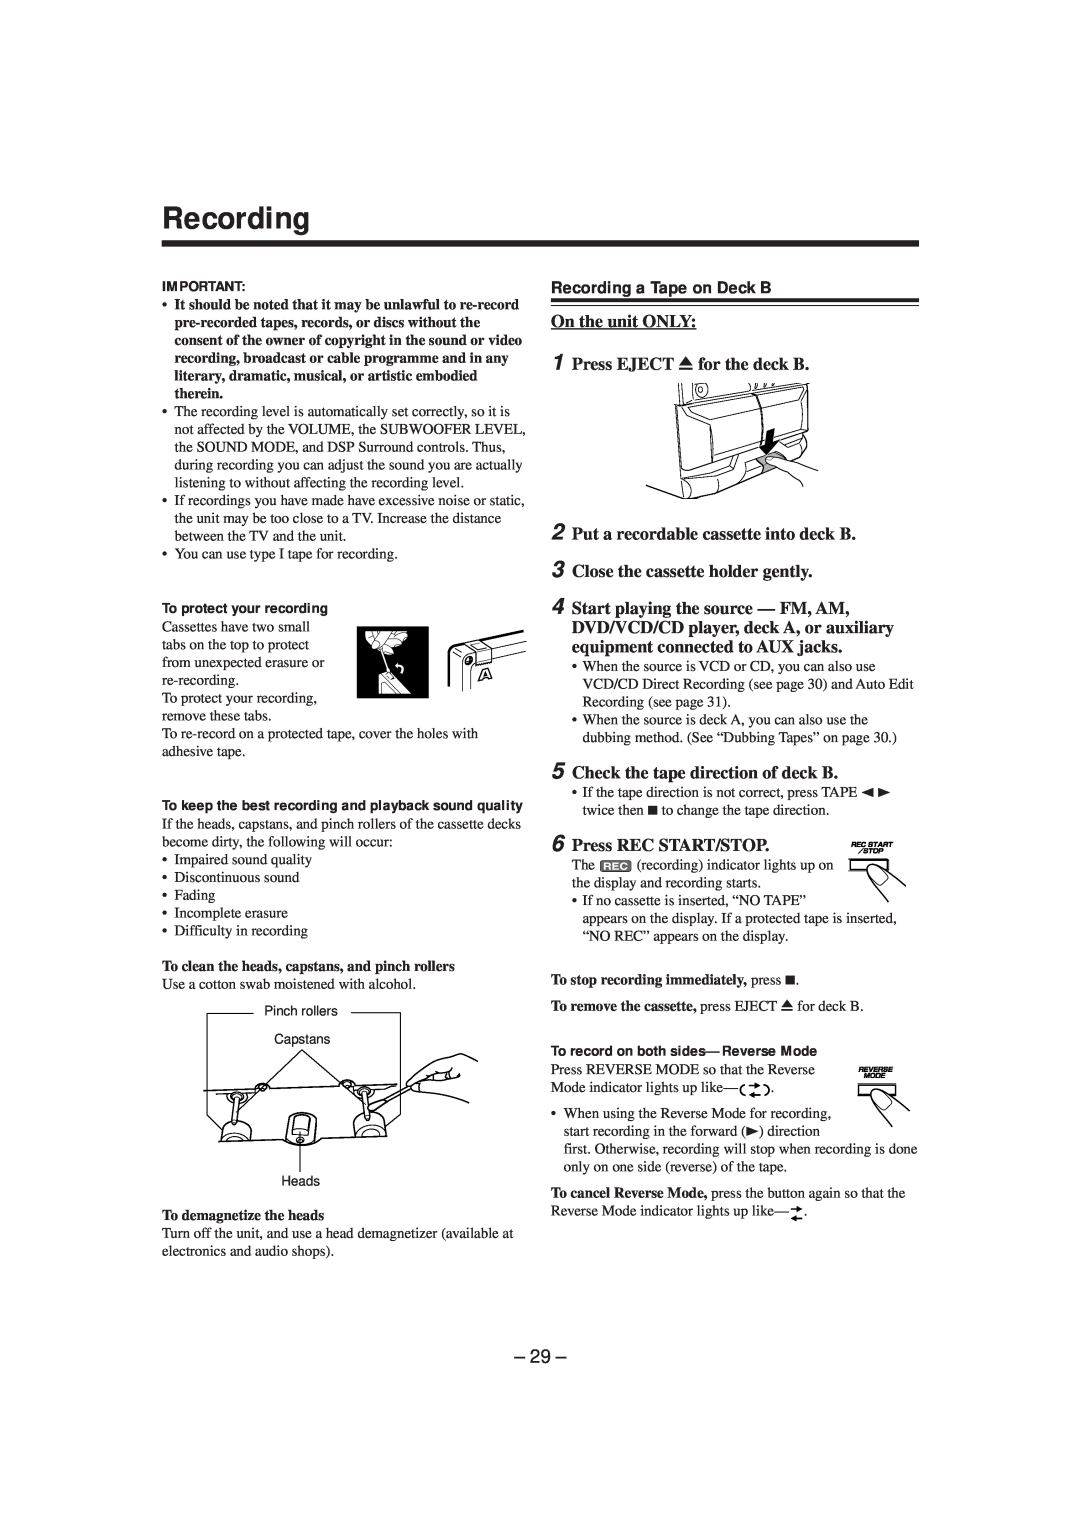 JVC MX-DVA9 manual 1 2 3, 29, Recording a Tape on Deck B, Check the tape direction of deck B, Press REC START/STOP 